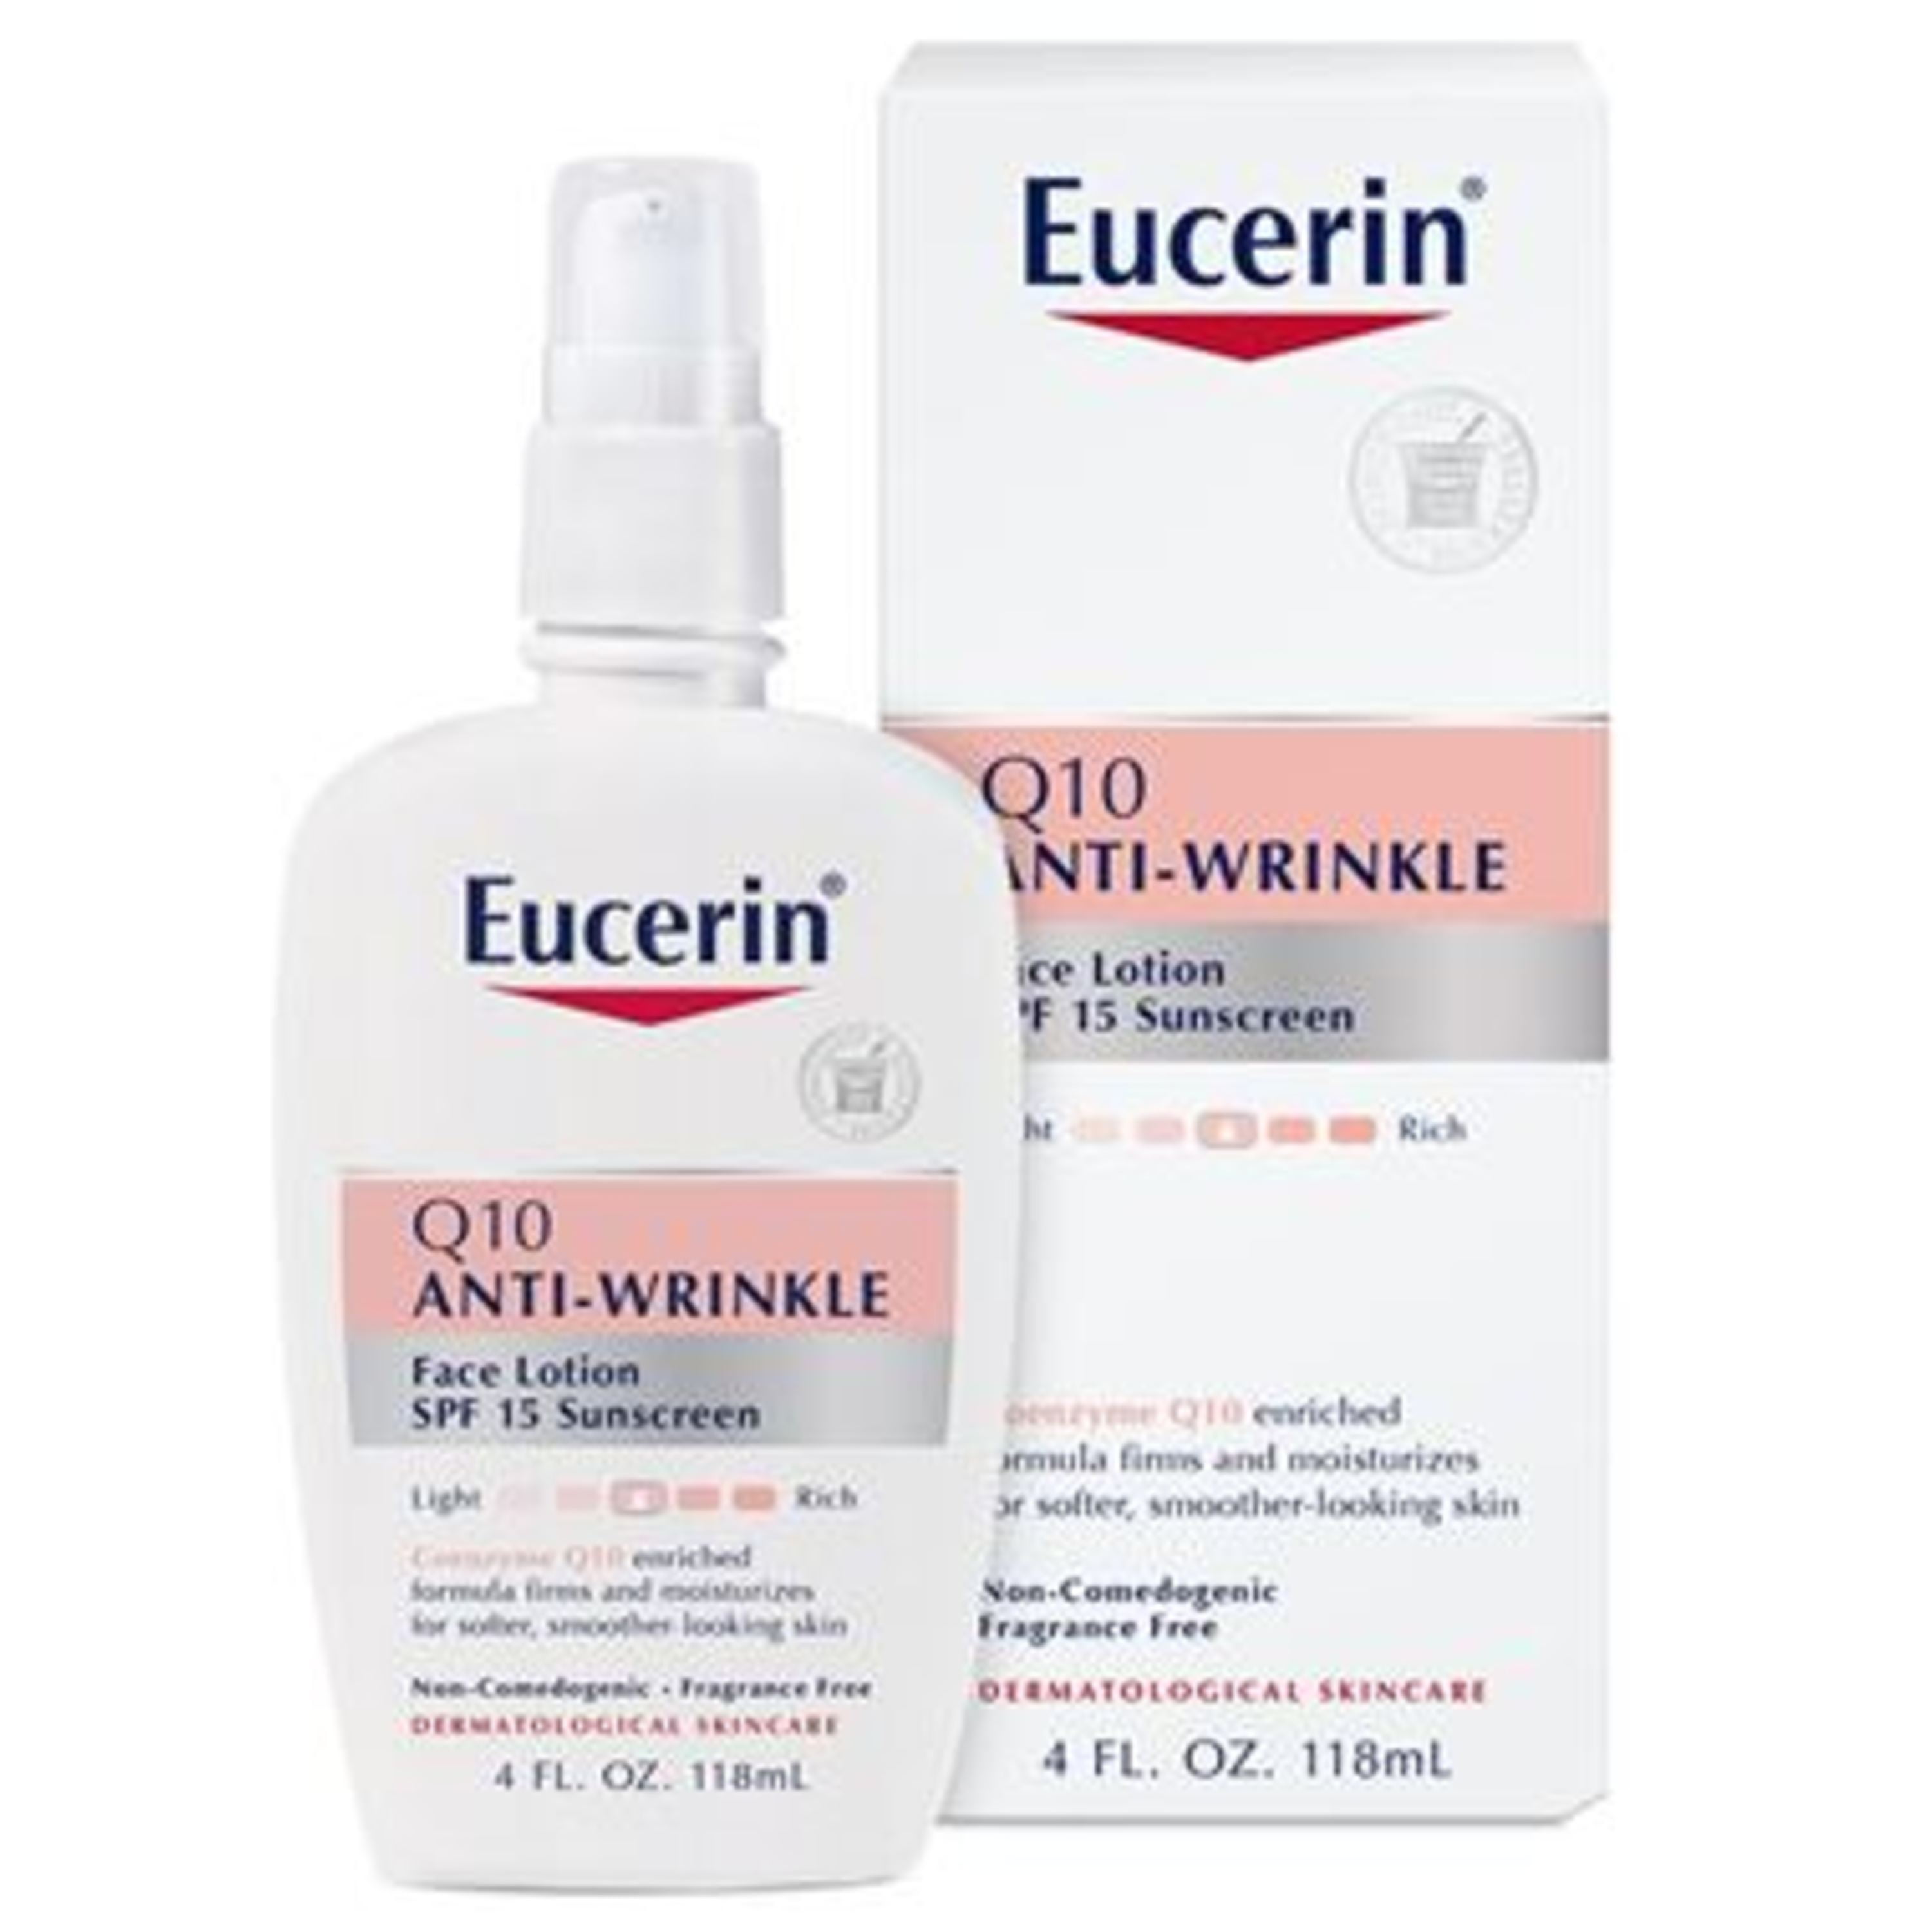 eucerin q10 anti wrinkle cream ingredients tavak termékek anti aging